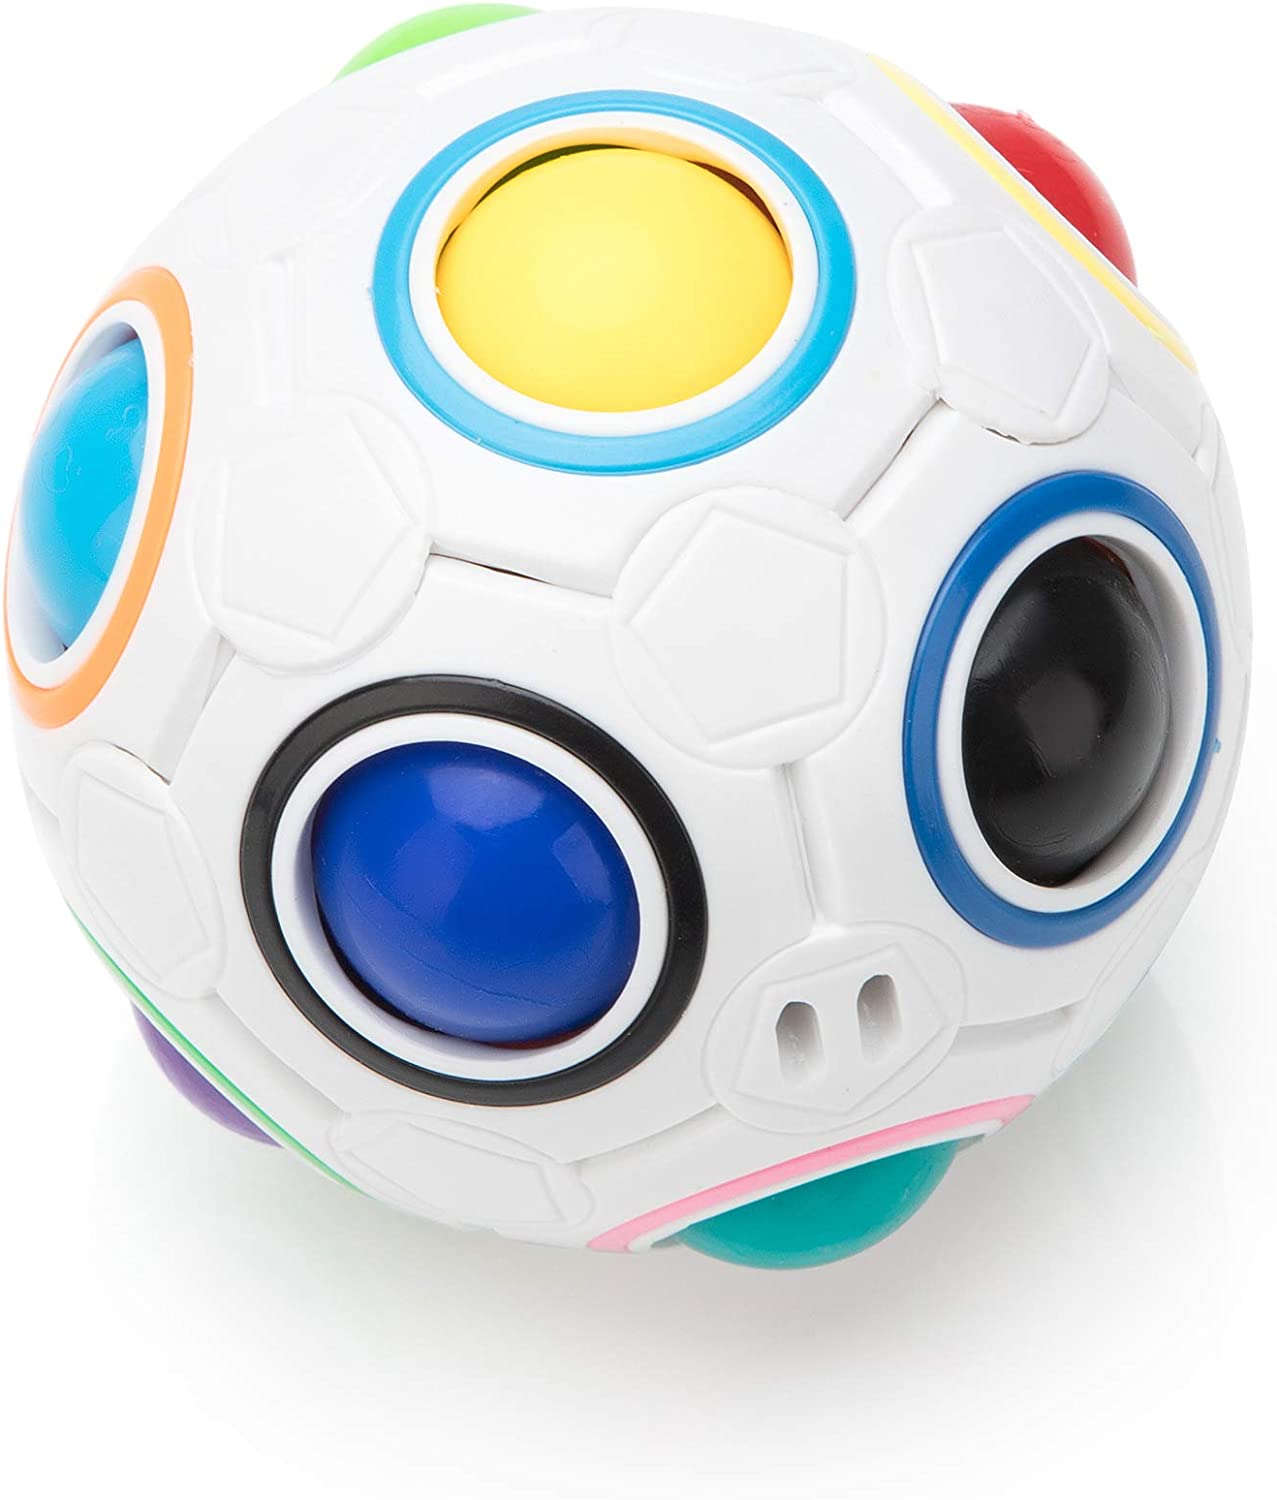 Fidget Ball Regenbogenball Fidget Toy Handspielzeug Anti Stress Spielzeug